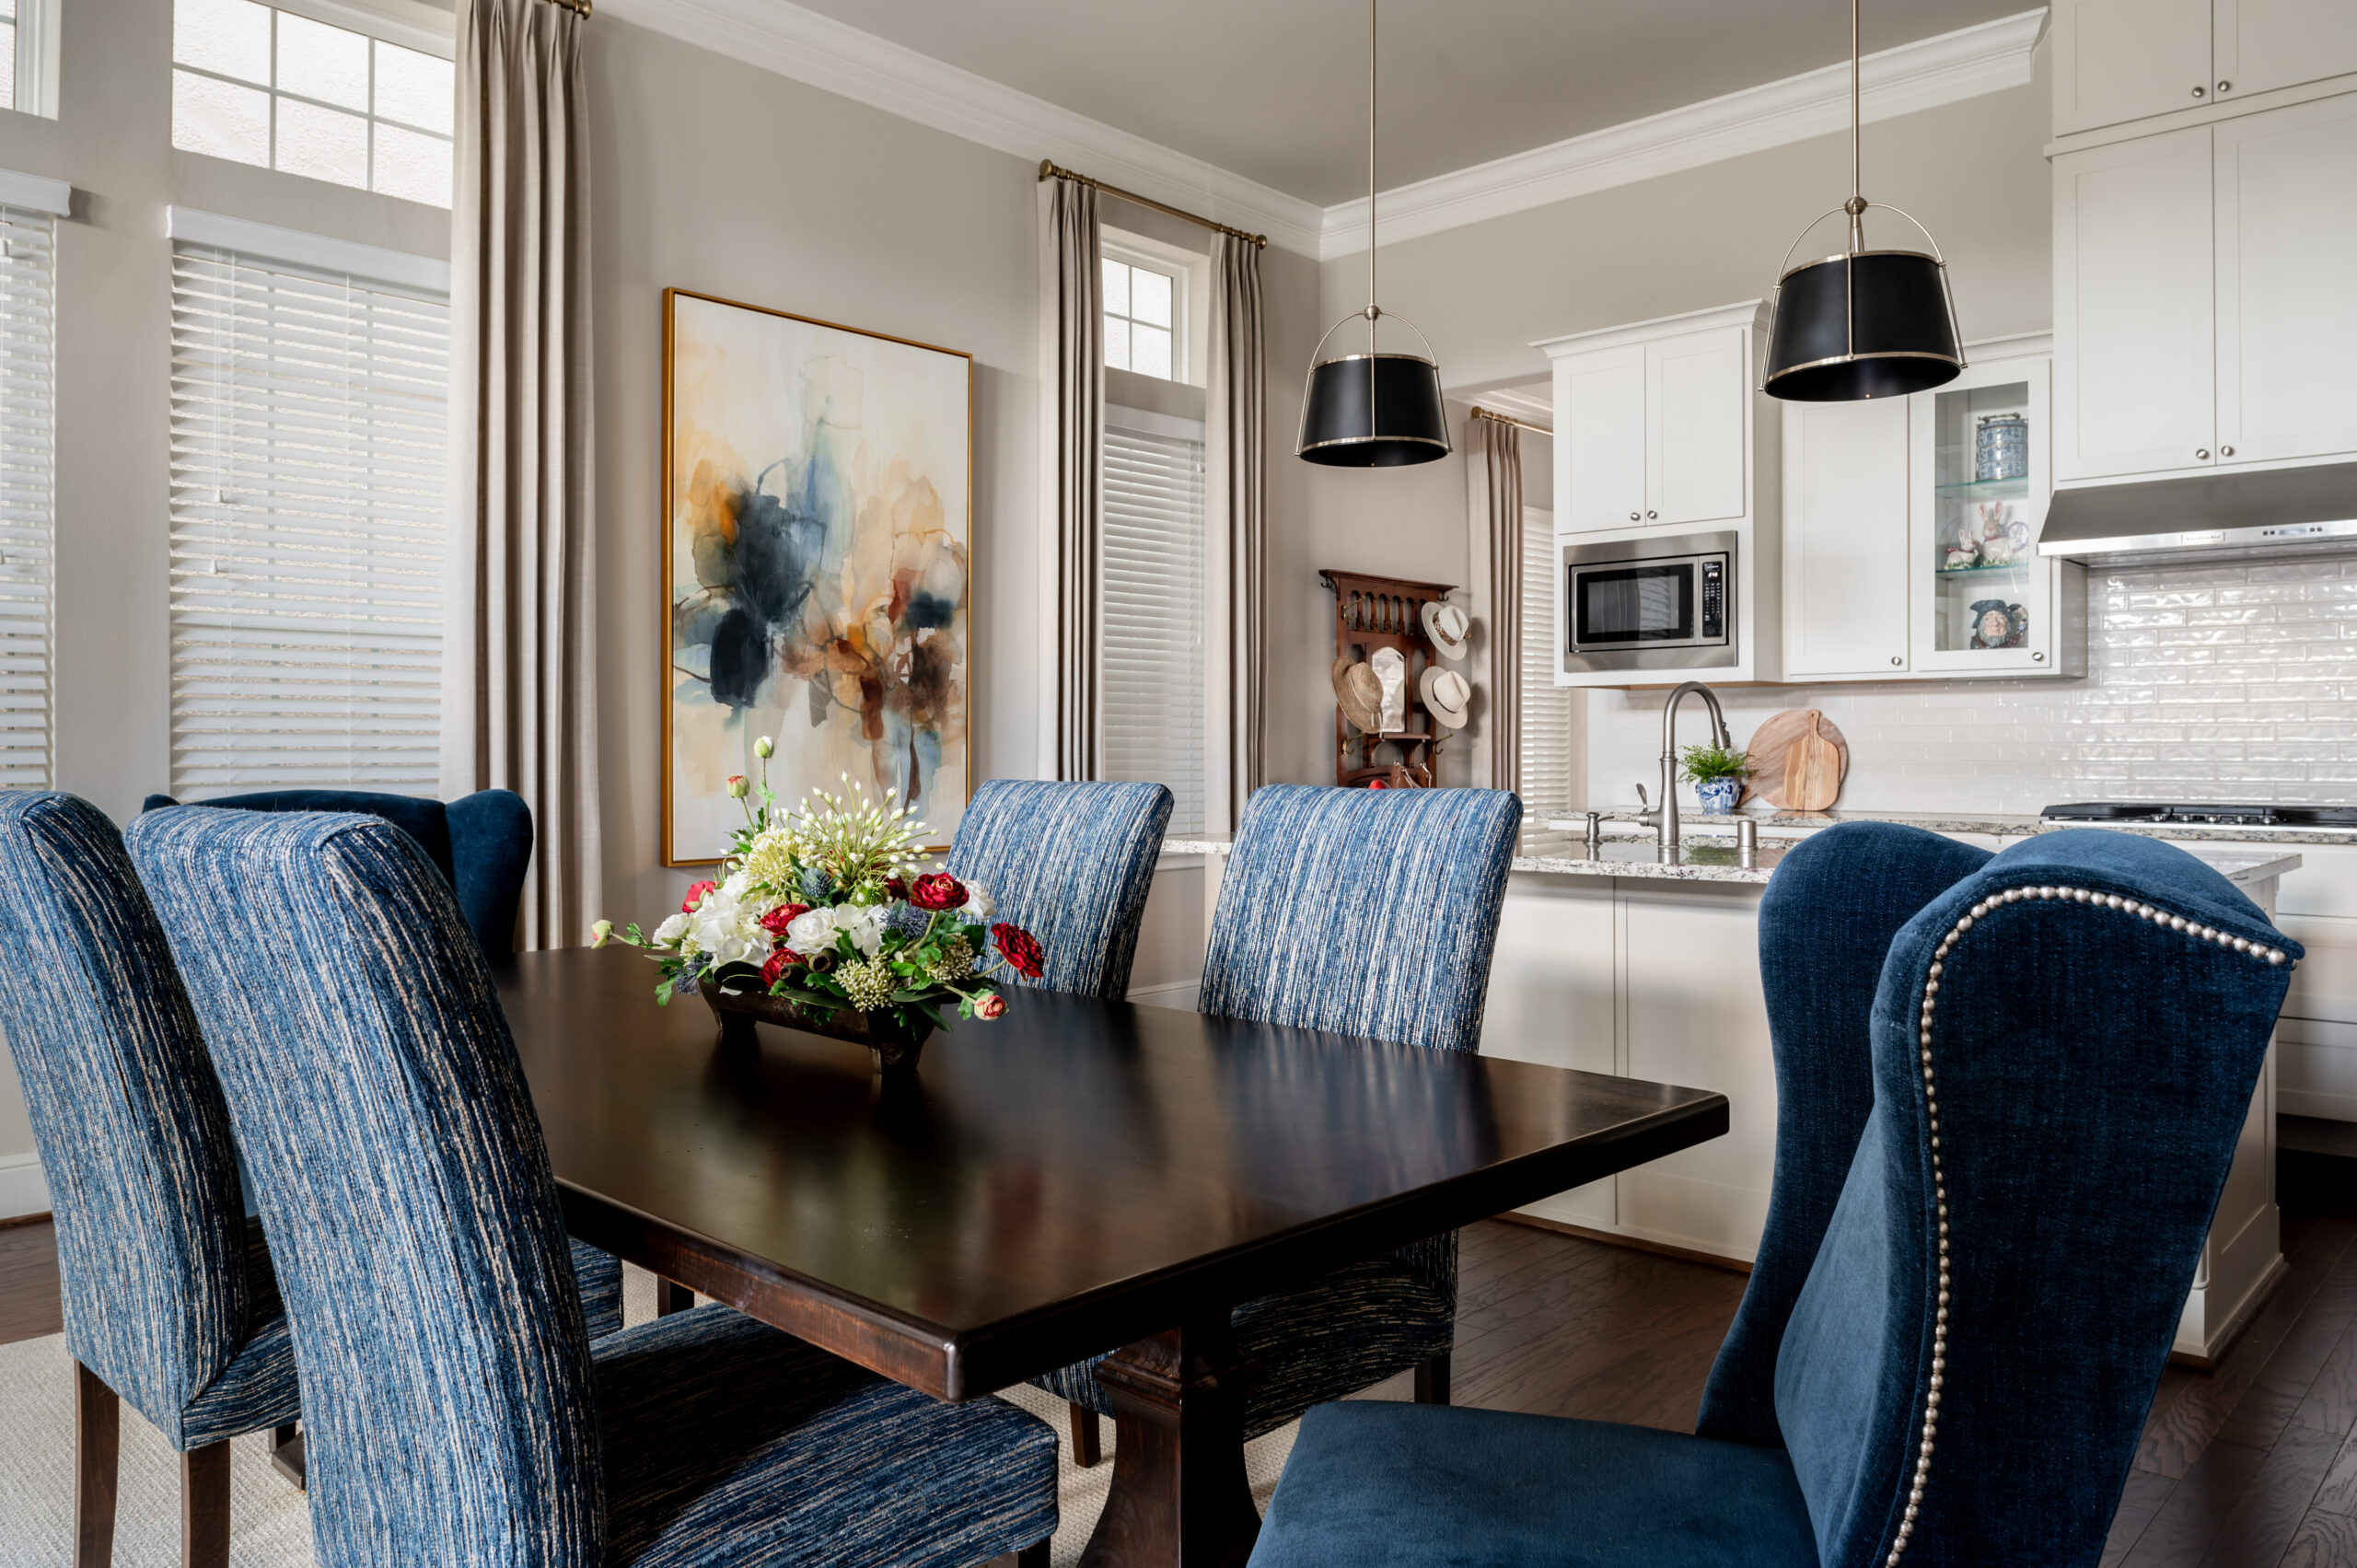 Dining room interior design with blue furniture